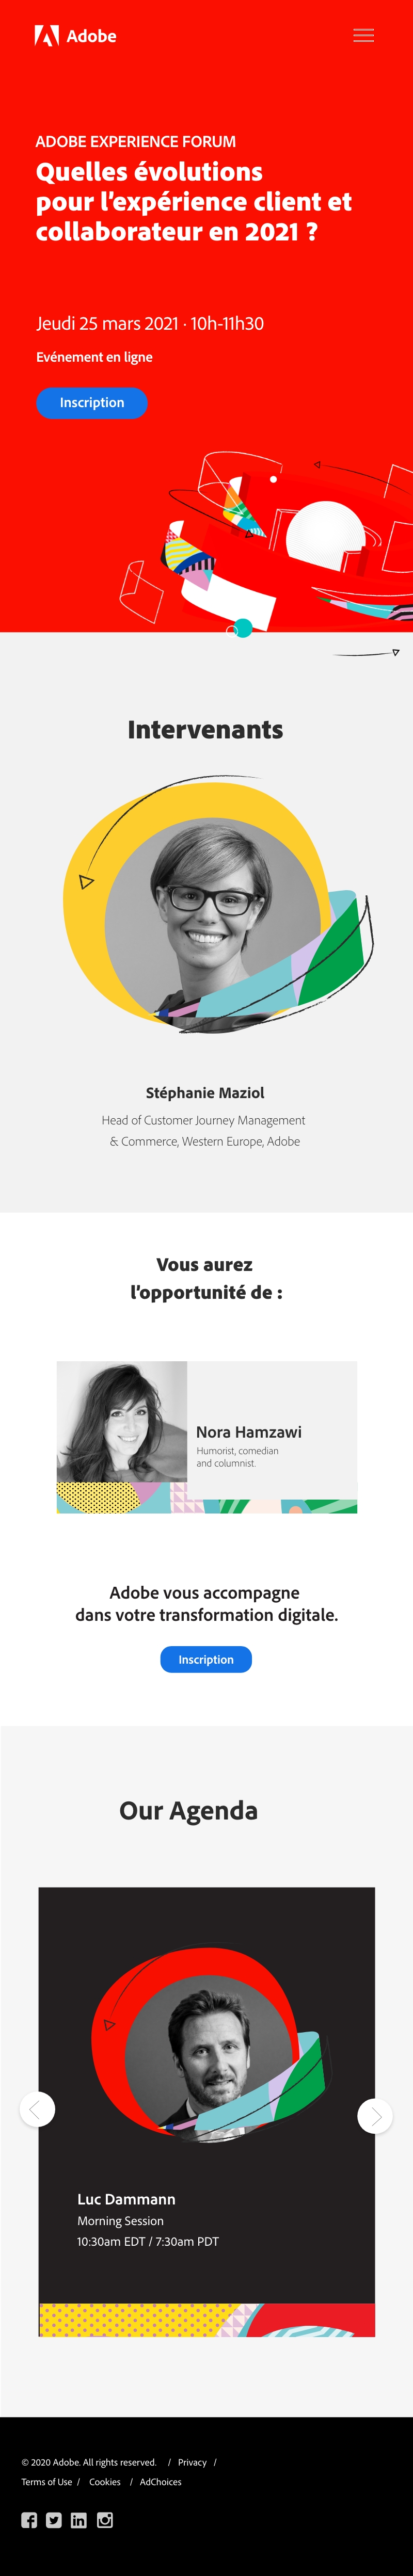 Adobe Experience Forum France